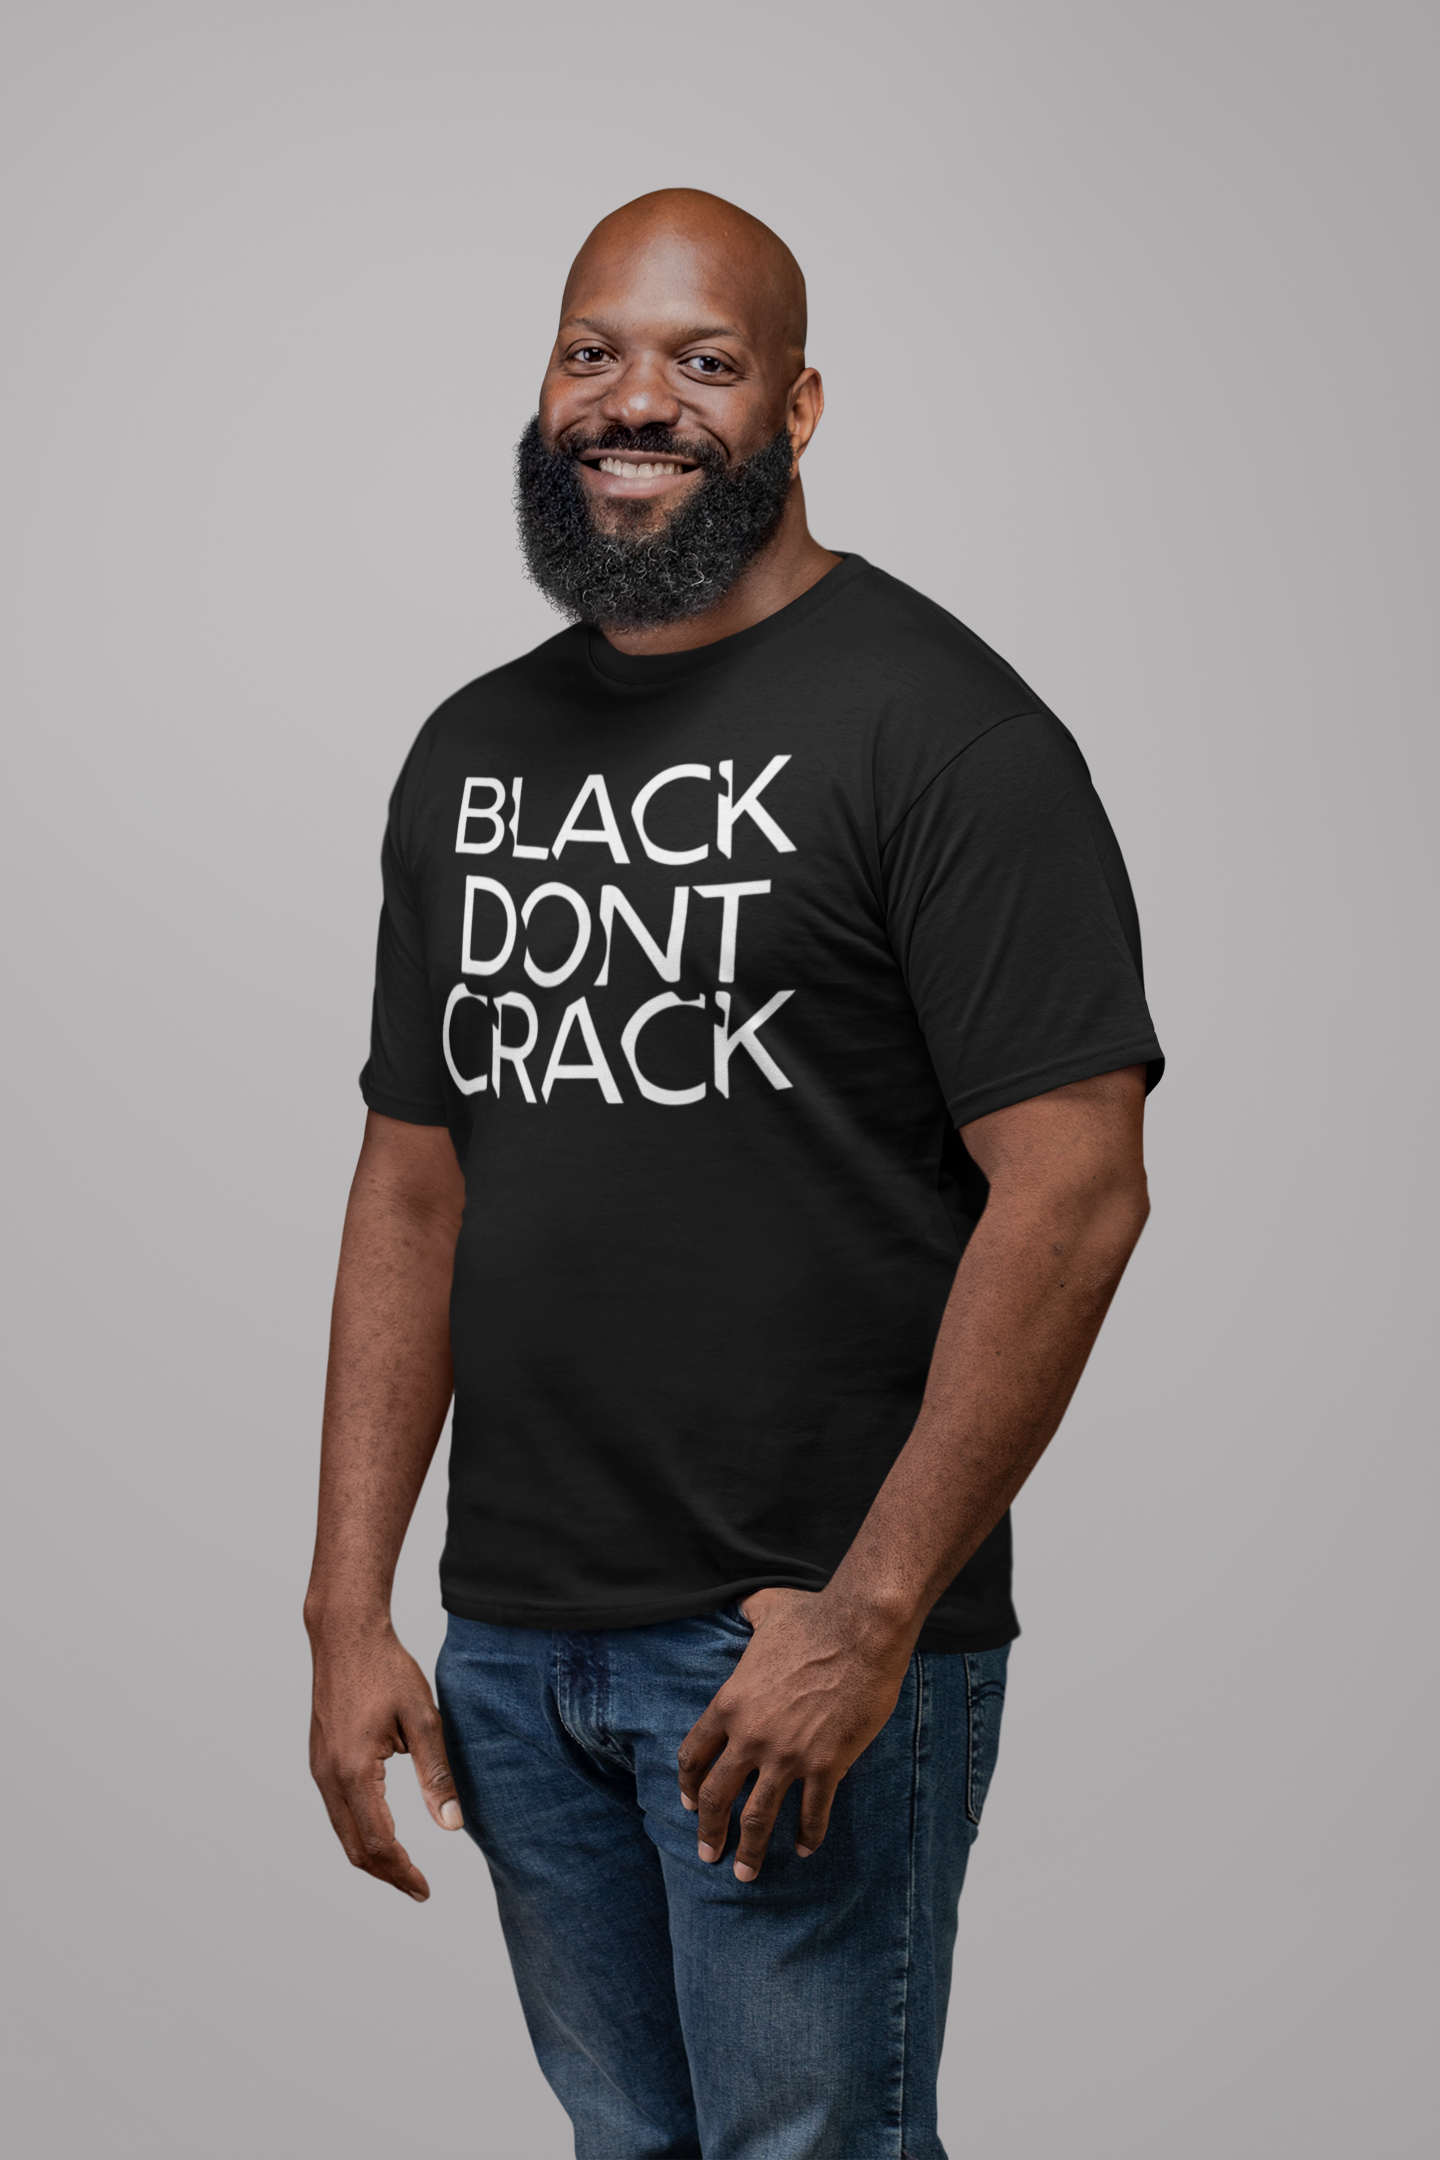 Black Don't Crack. T-shirts